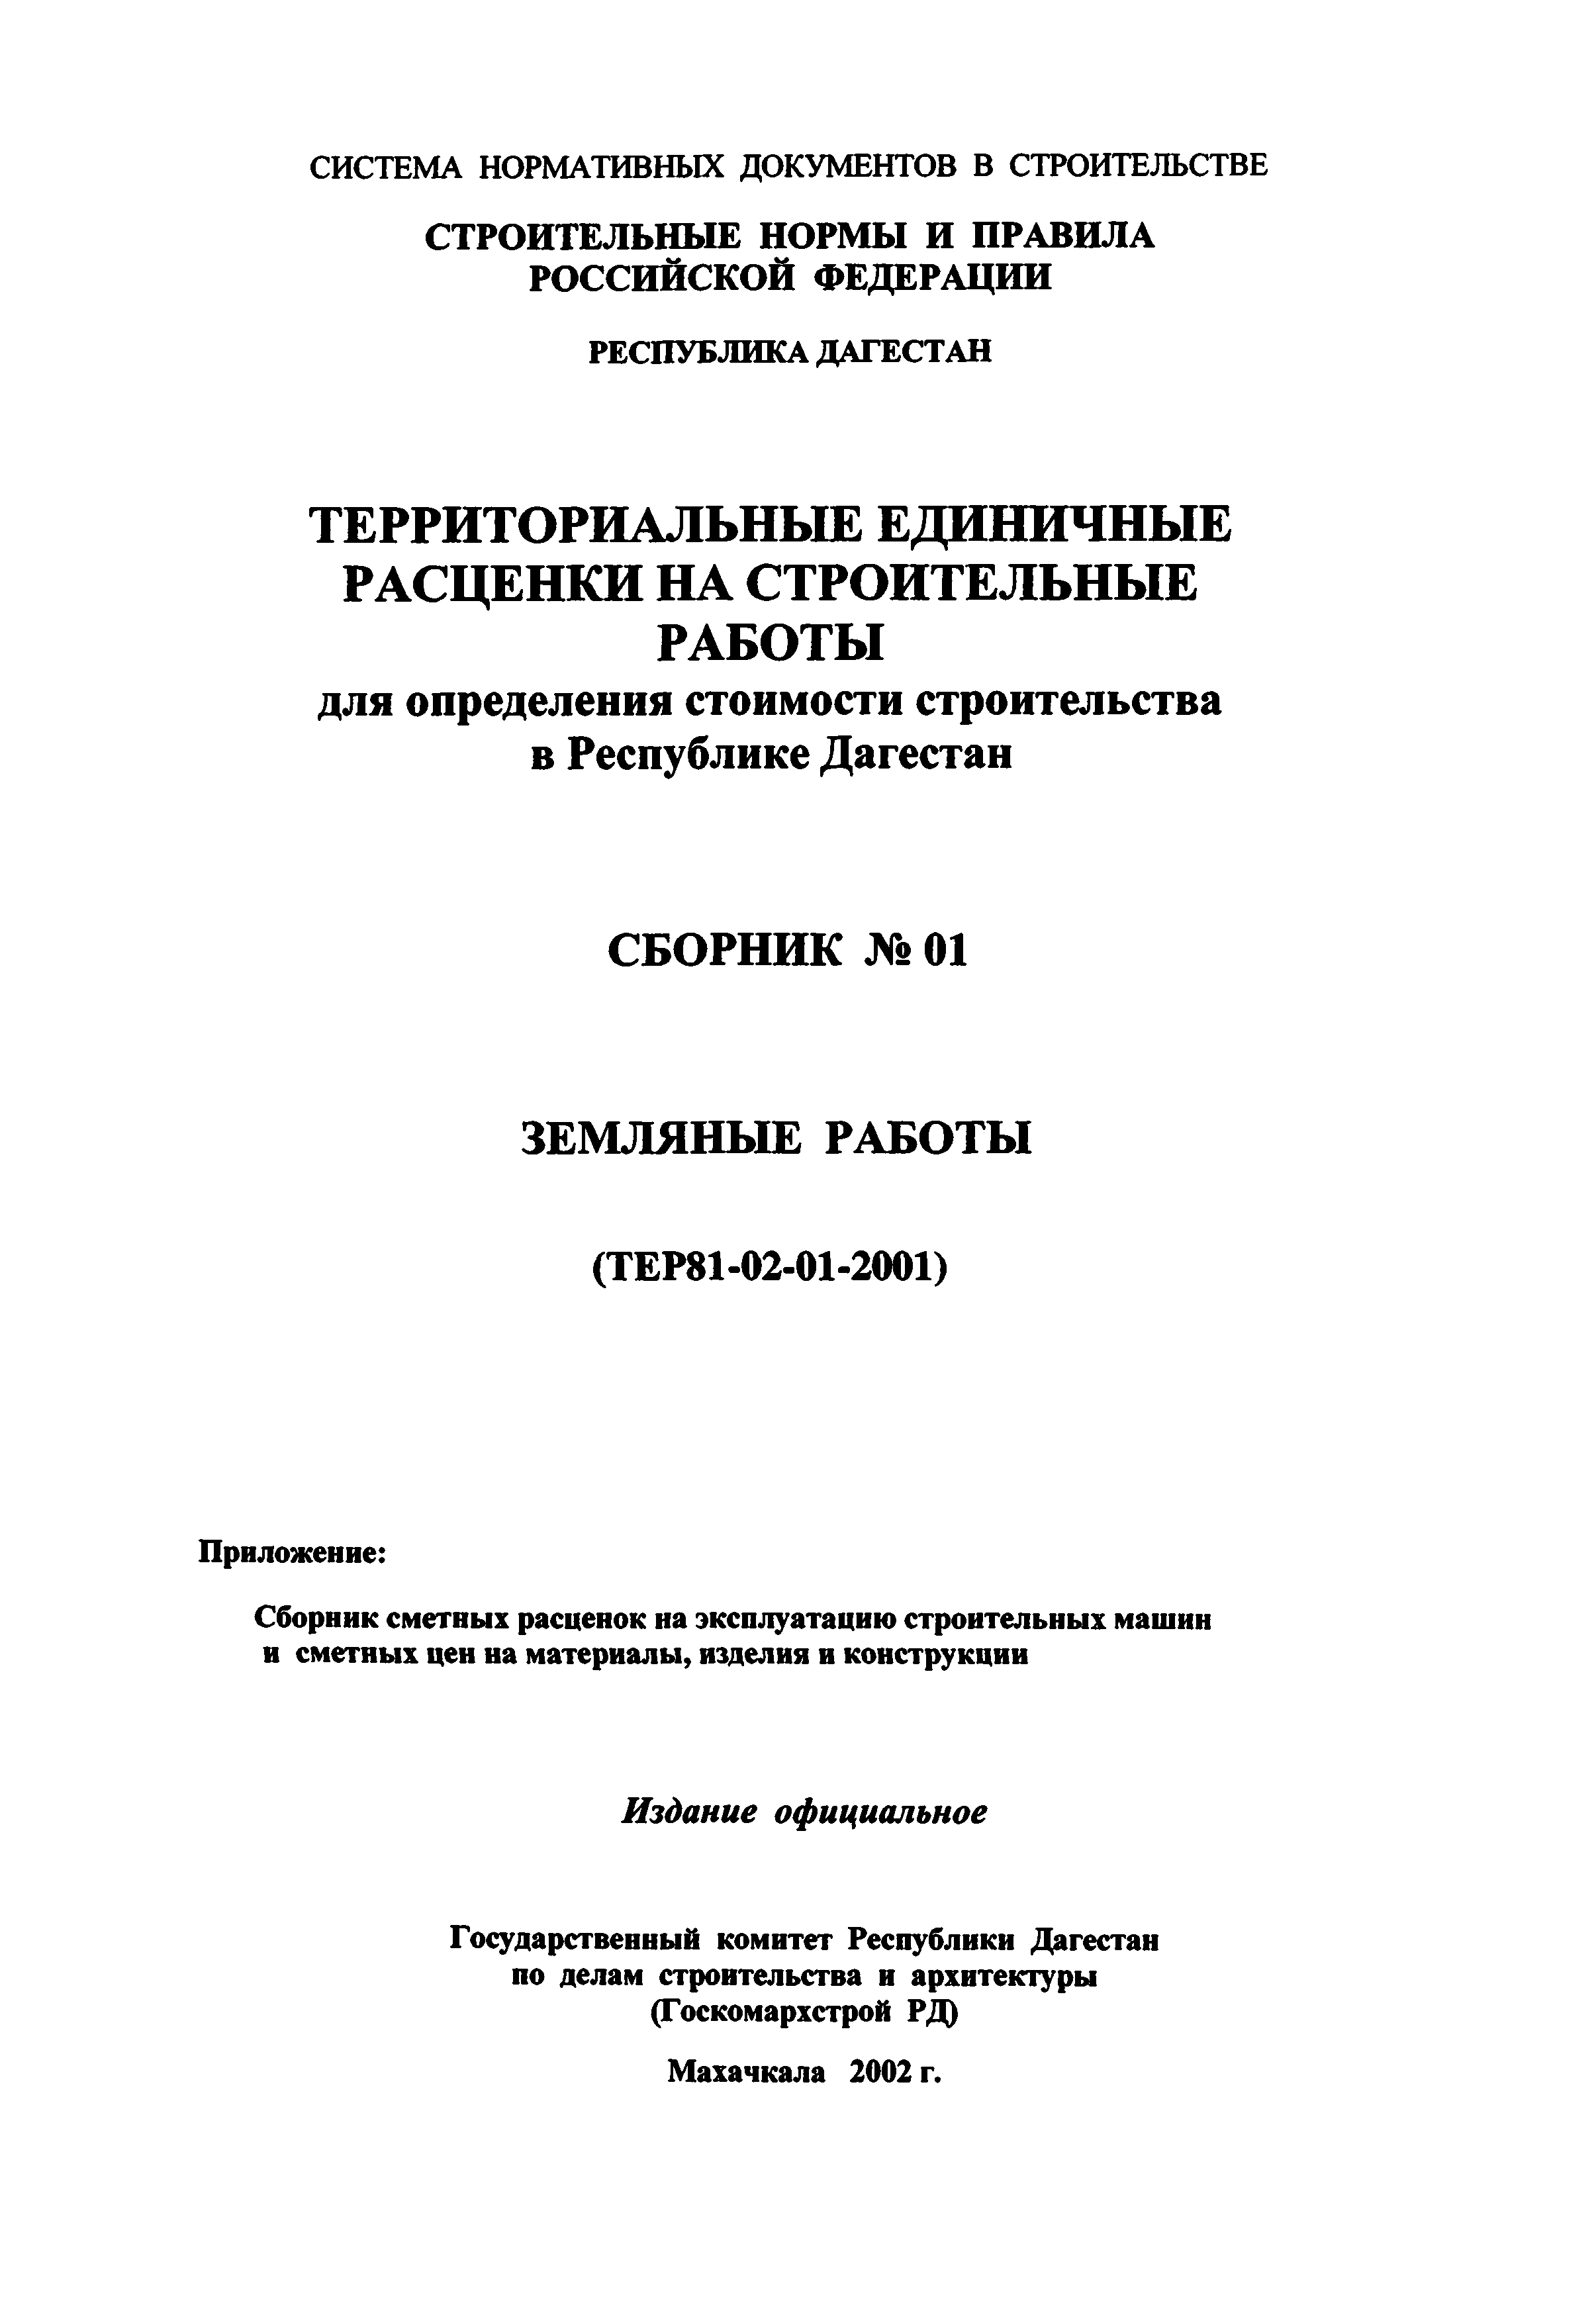 ТЕР Республика Дагестан 2001-01